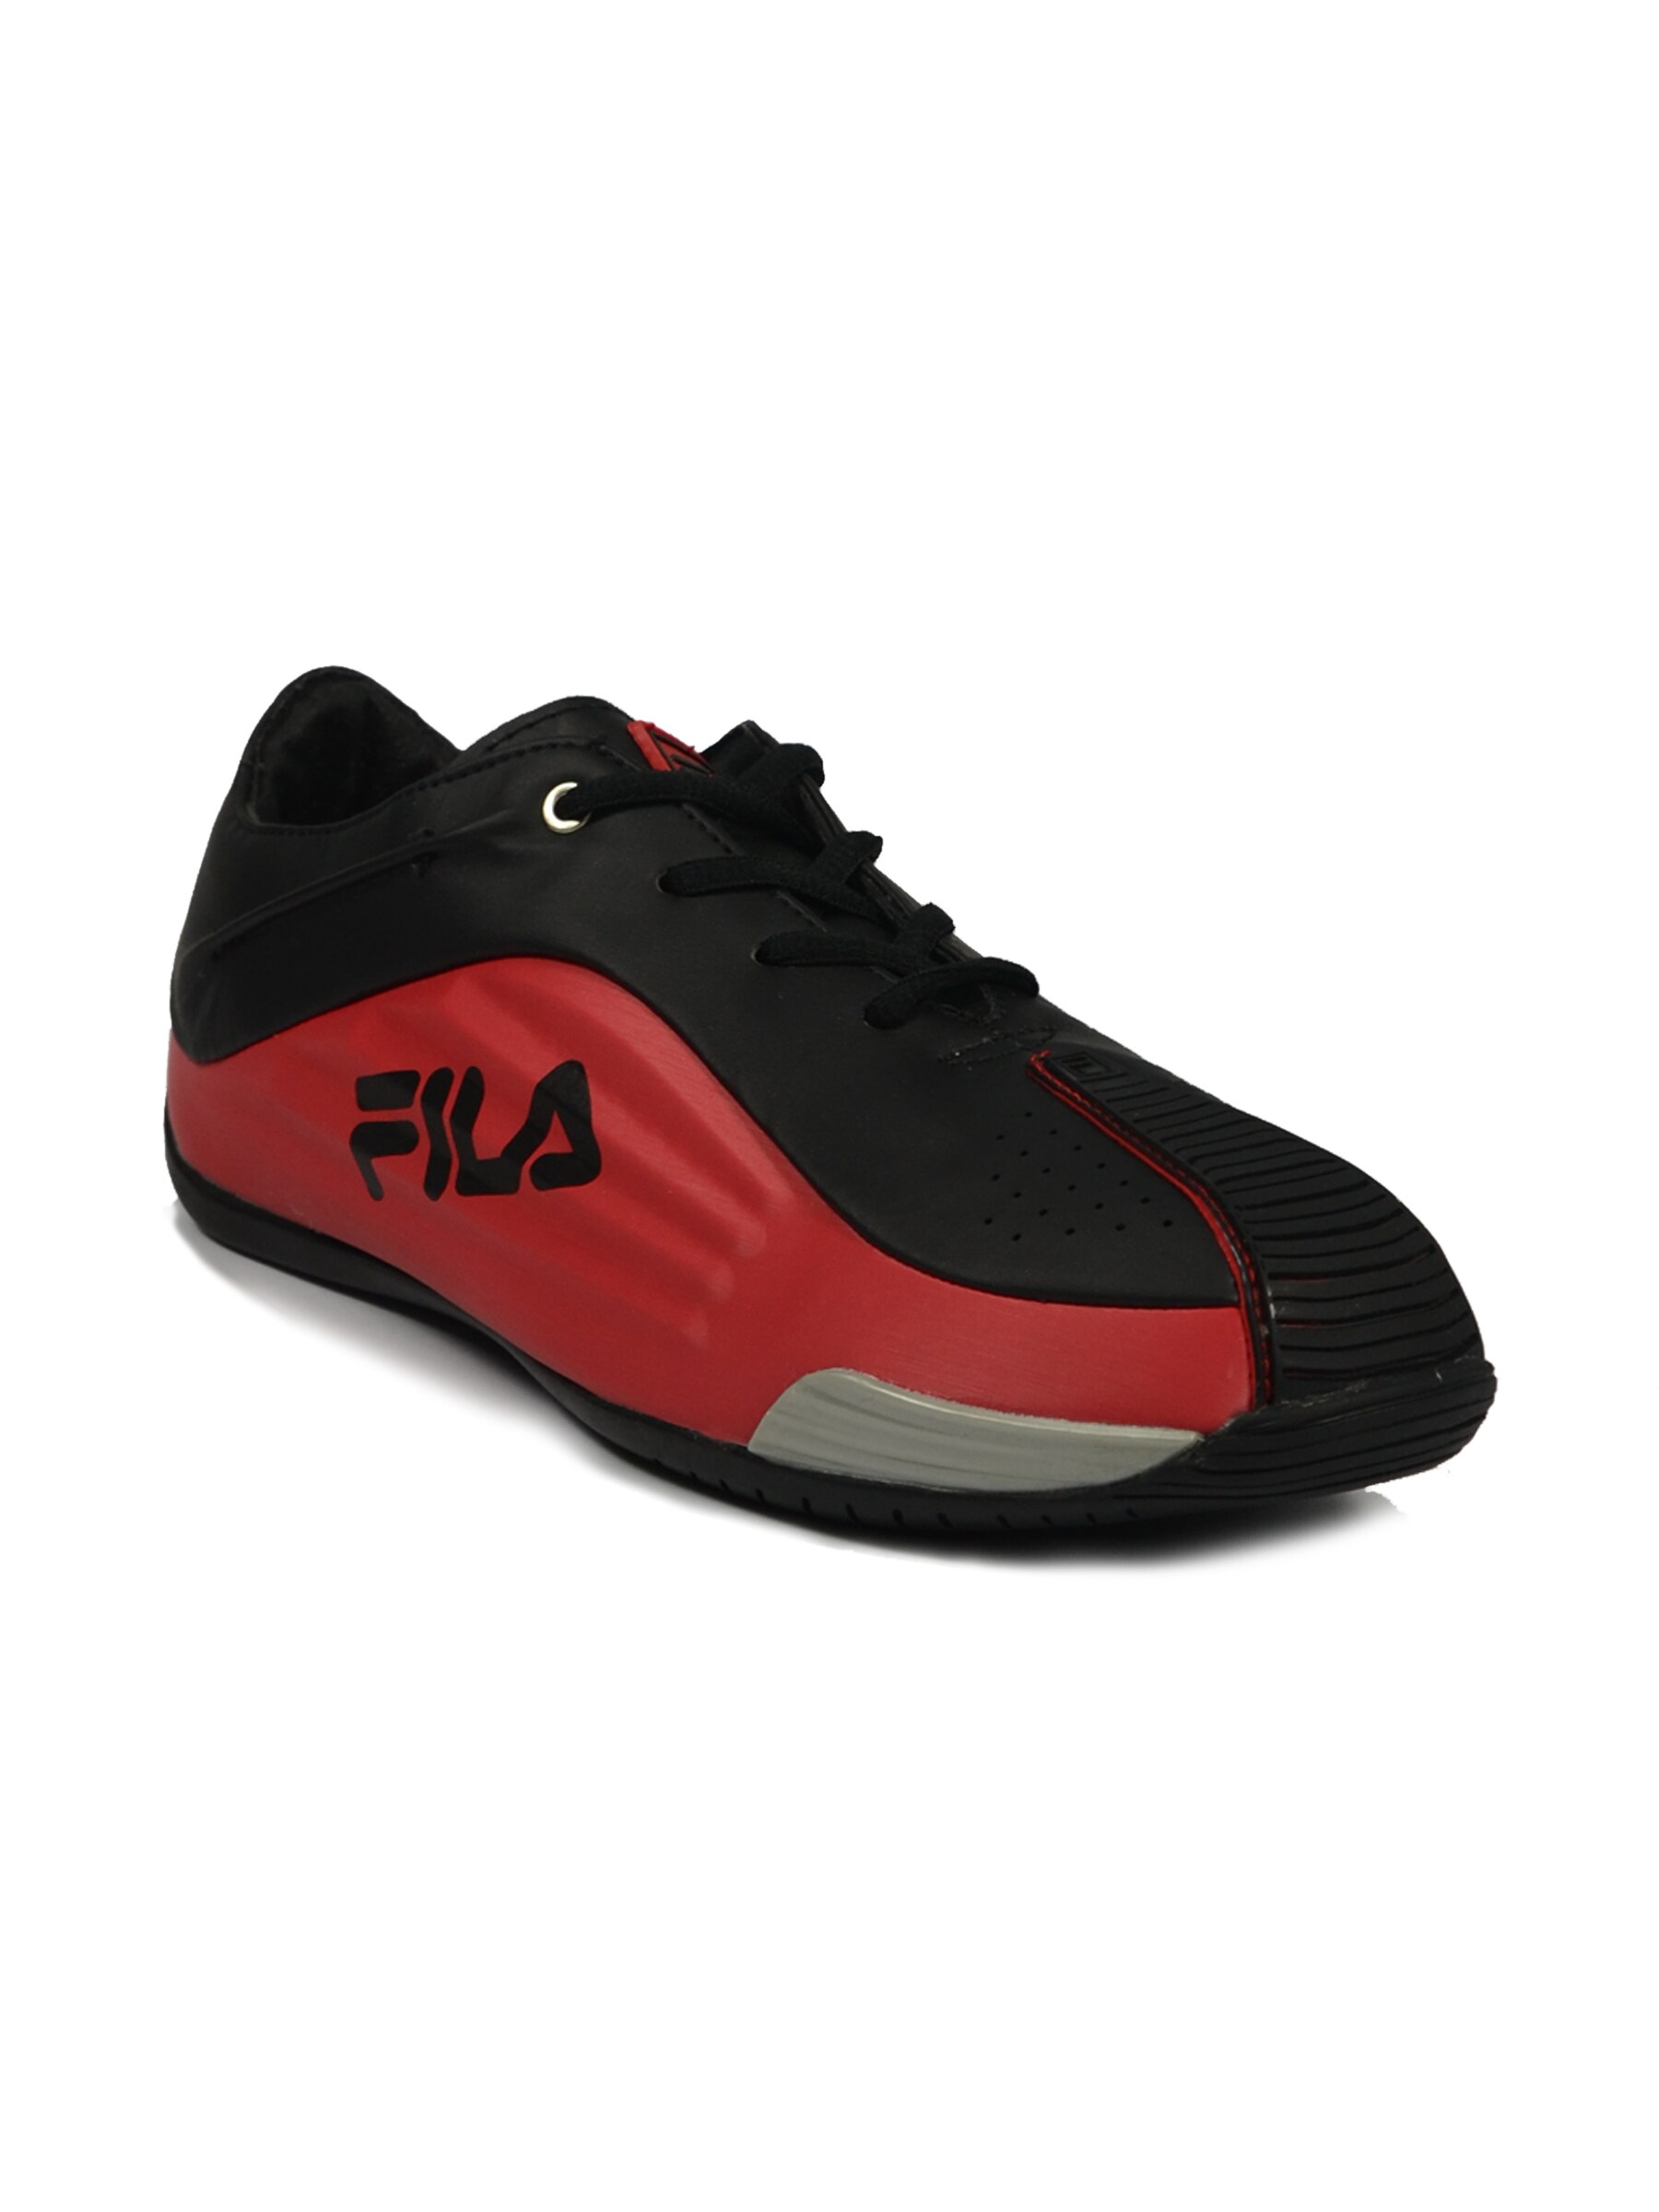 Fila Men's Turbo Black Red Shoe